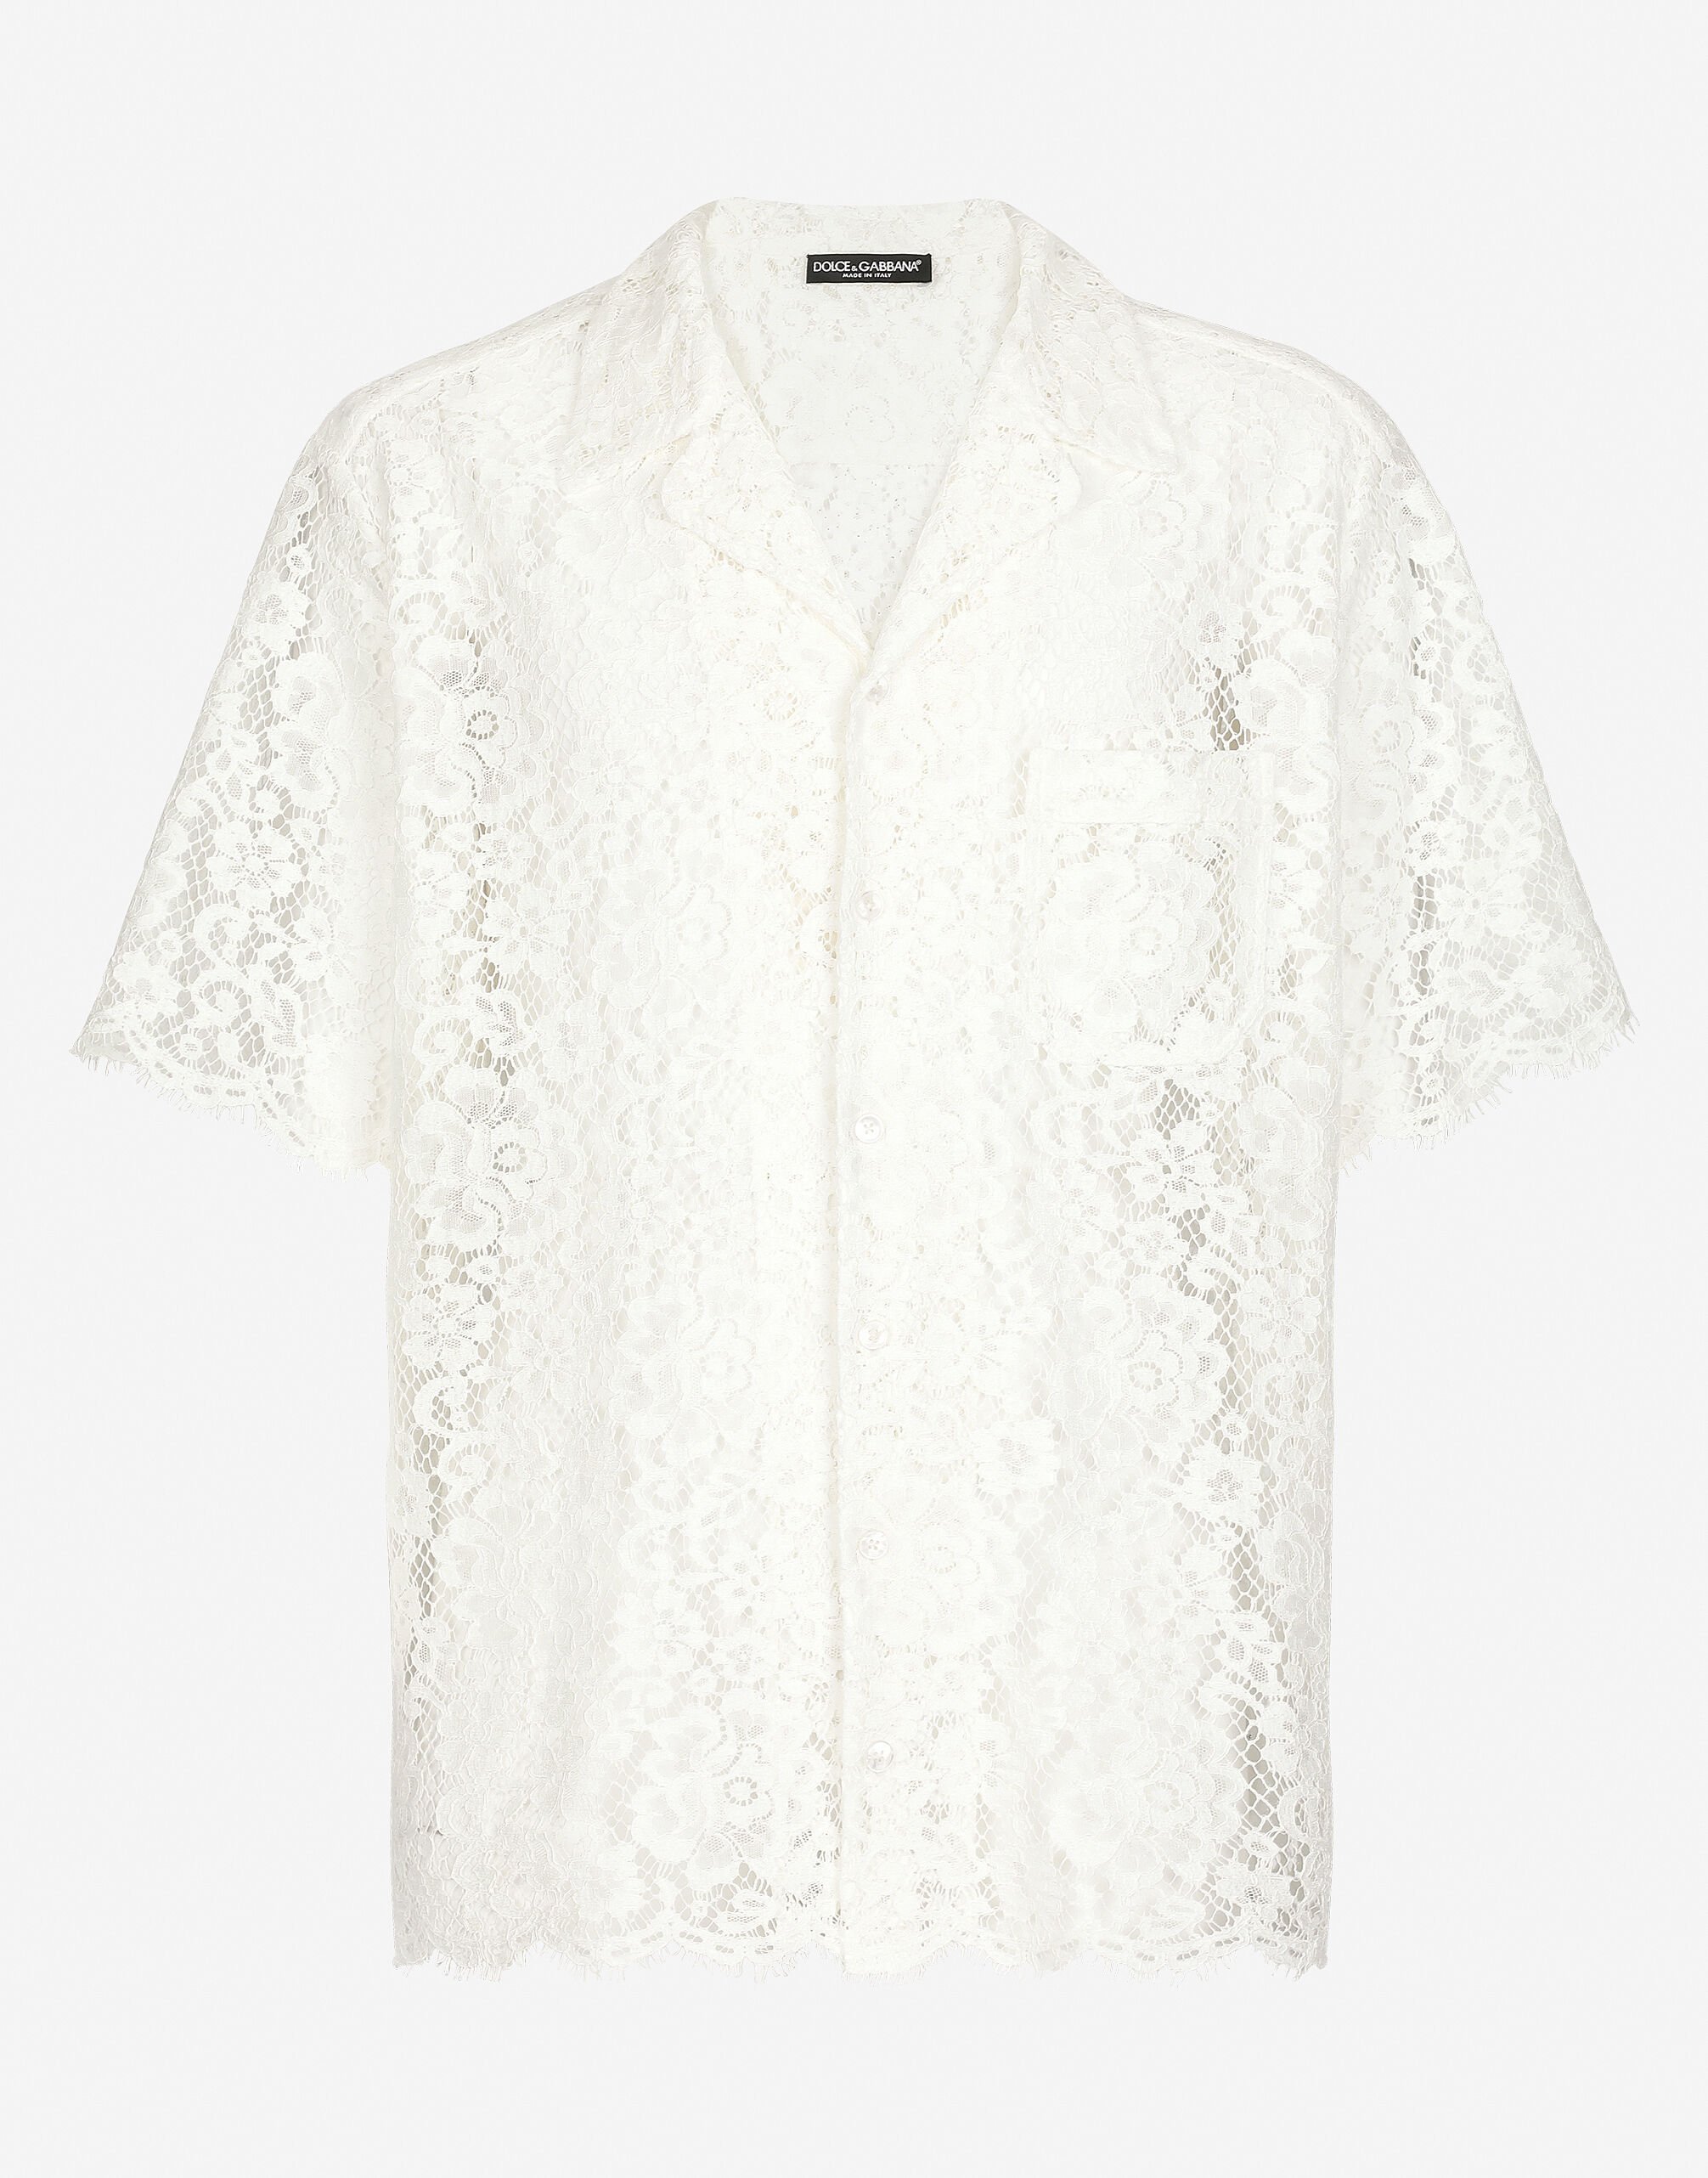 Dolce & Gabbana 레이스 하와이안 셔츠 멀티 컬러 G5JU9ZGEZZ3